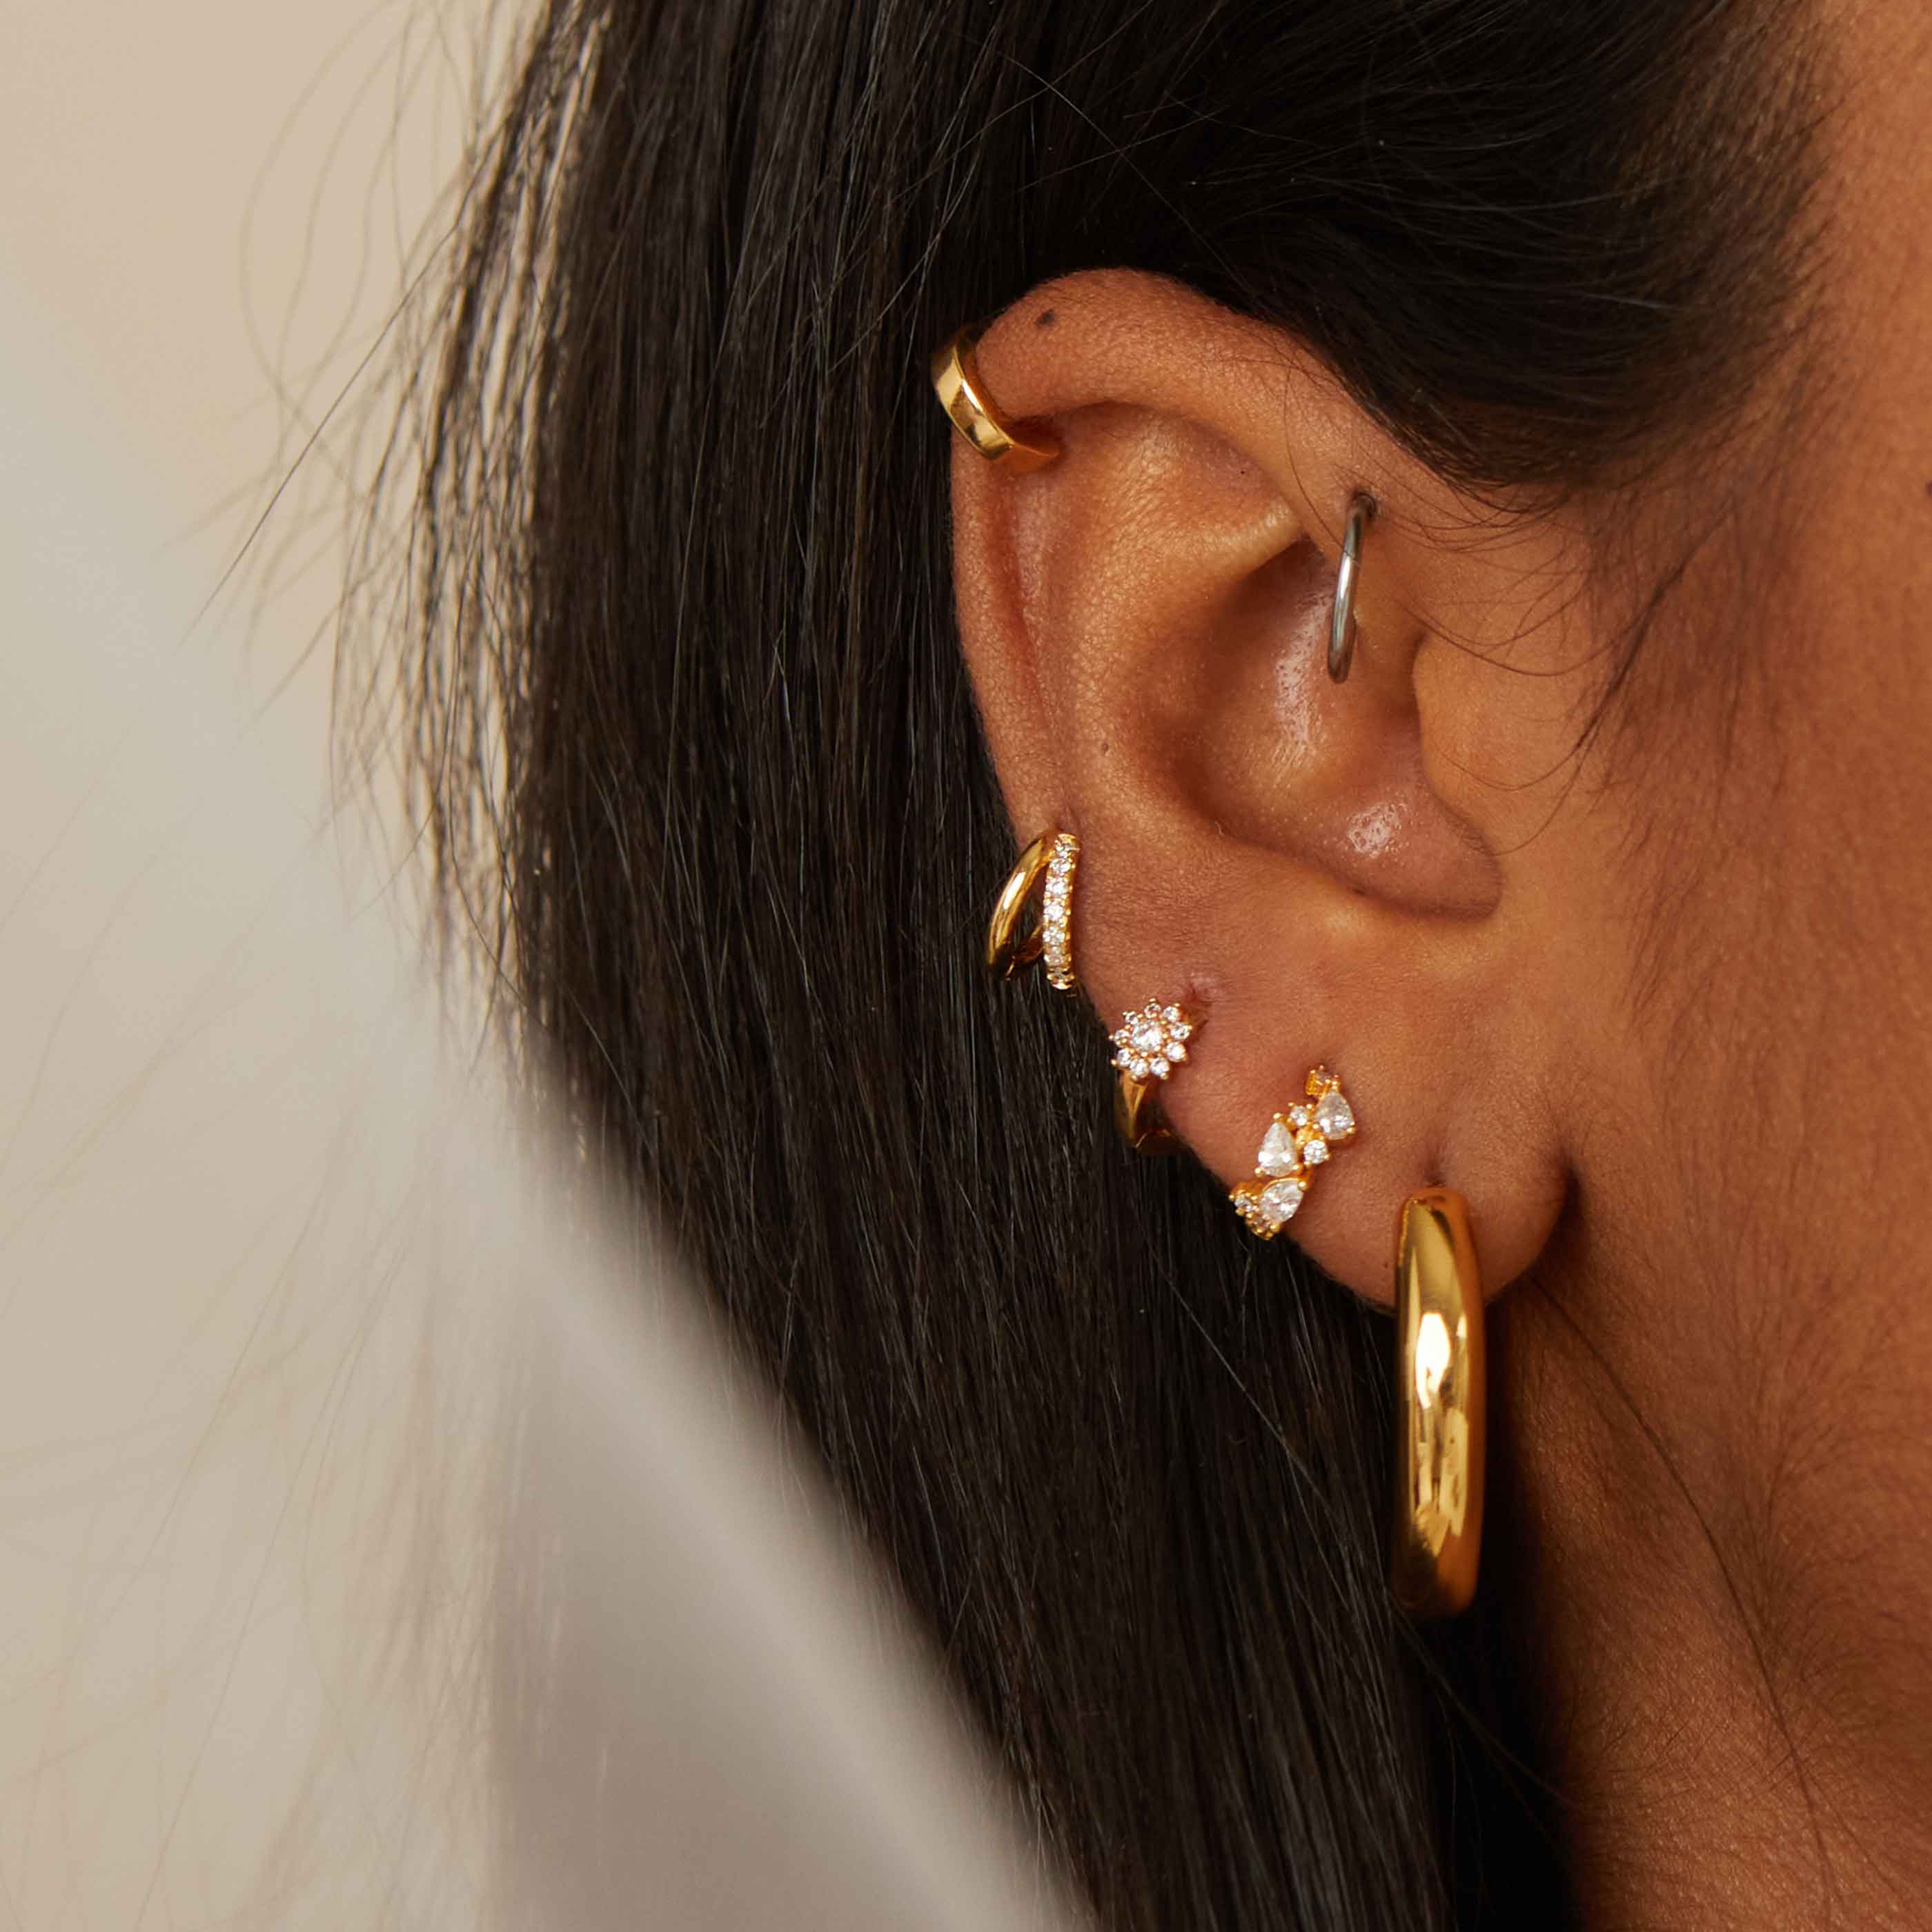 Amazon.com: Earrings For Upper Ear Cartilage